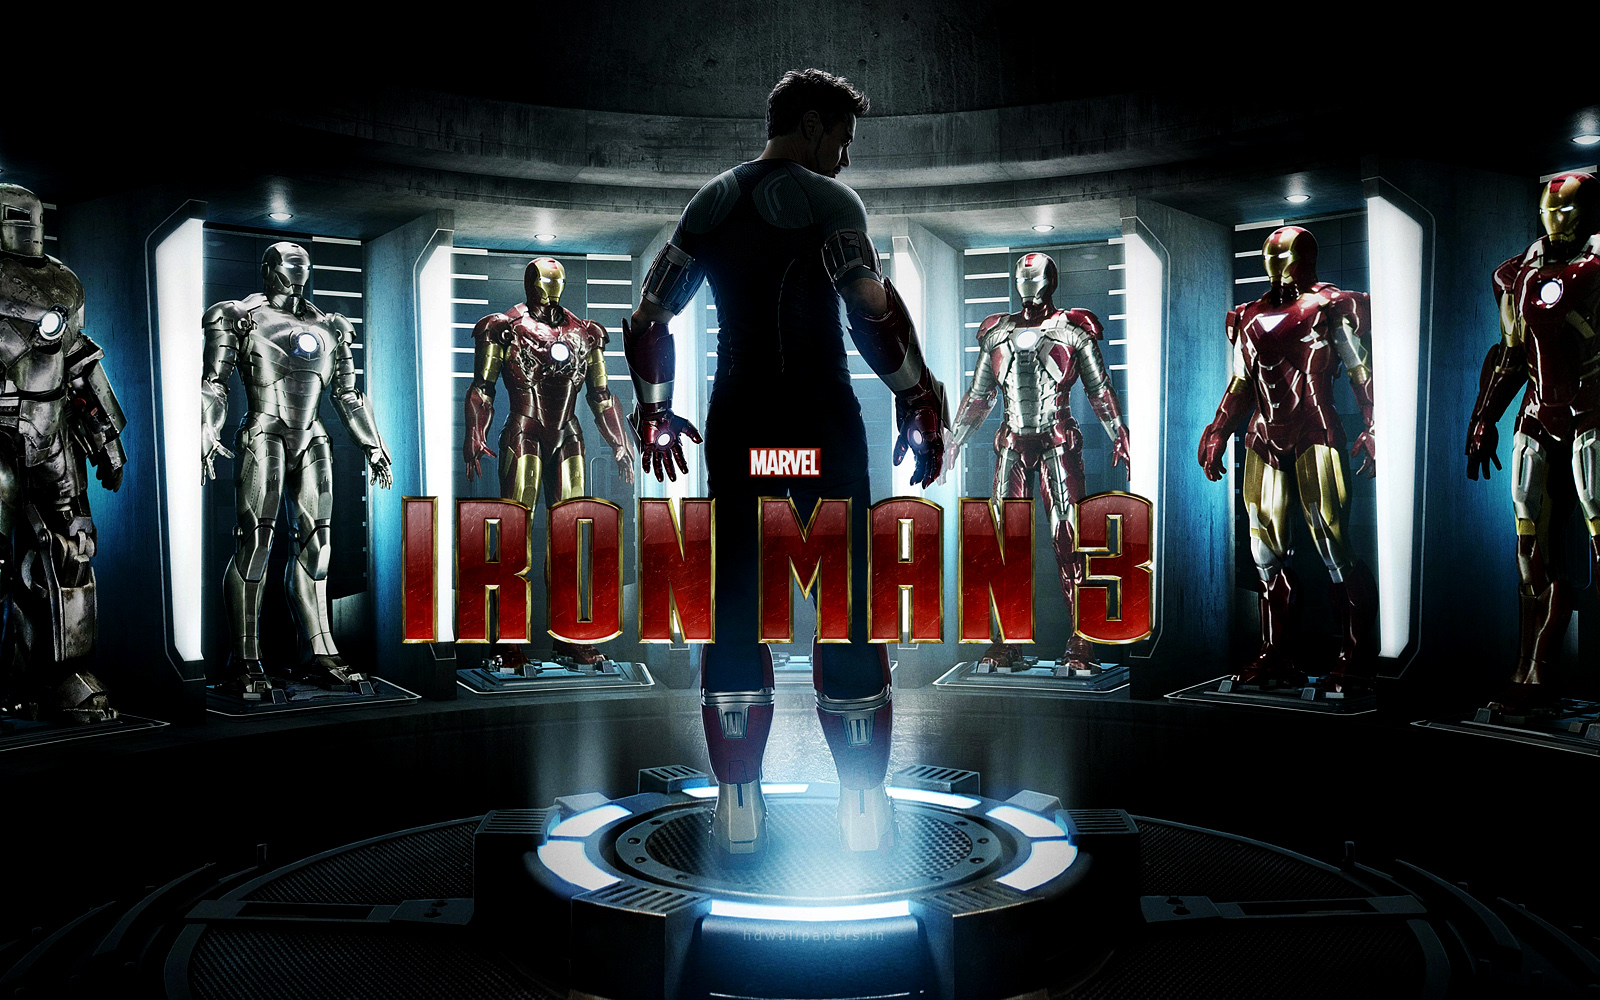 https://blogger.googleusercontent.com/img/b/R29vZ2xl/AVvXsEjkDliQVLFd_H8l8TDu0bFx37CkltU53mbmxk4g6OspzCD4g55Cgo7xkx2ELbamoSwtywEKFGQrx9pgcYP2BbUJRZAZ2Y4fYE2pHQD8MbZXZ4iOxkndDC0i0vdPs8ZMG3CKjjVPB0sETnI/s1600/Iron-Man-3-Movie-HD-Wallpaper_Vvallpaper.Net.jpg